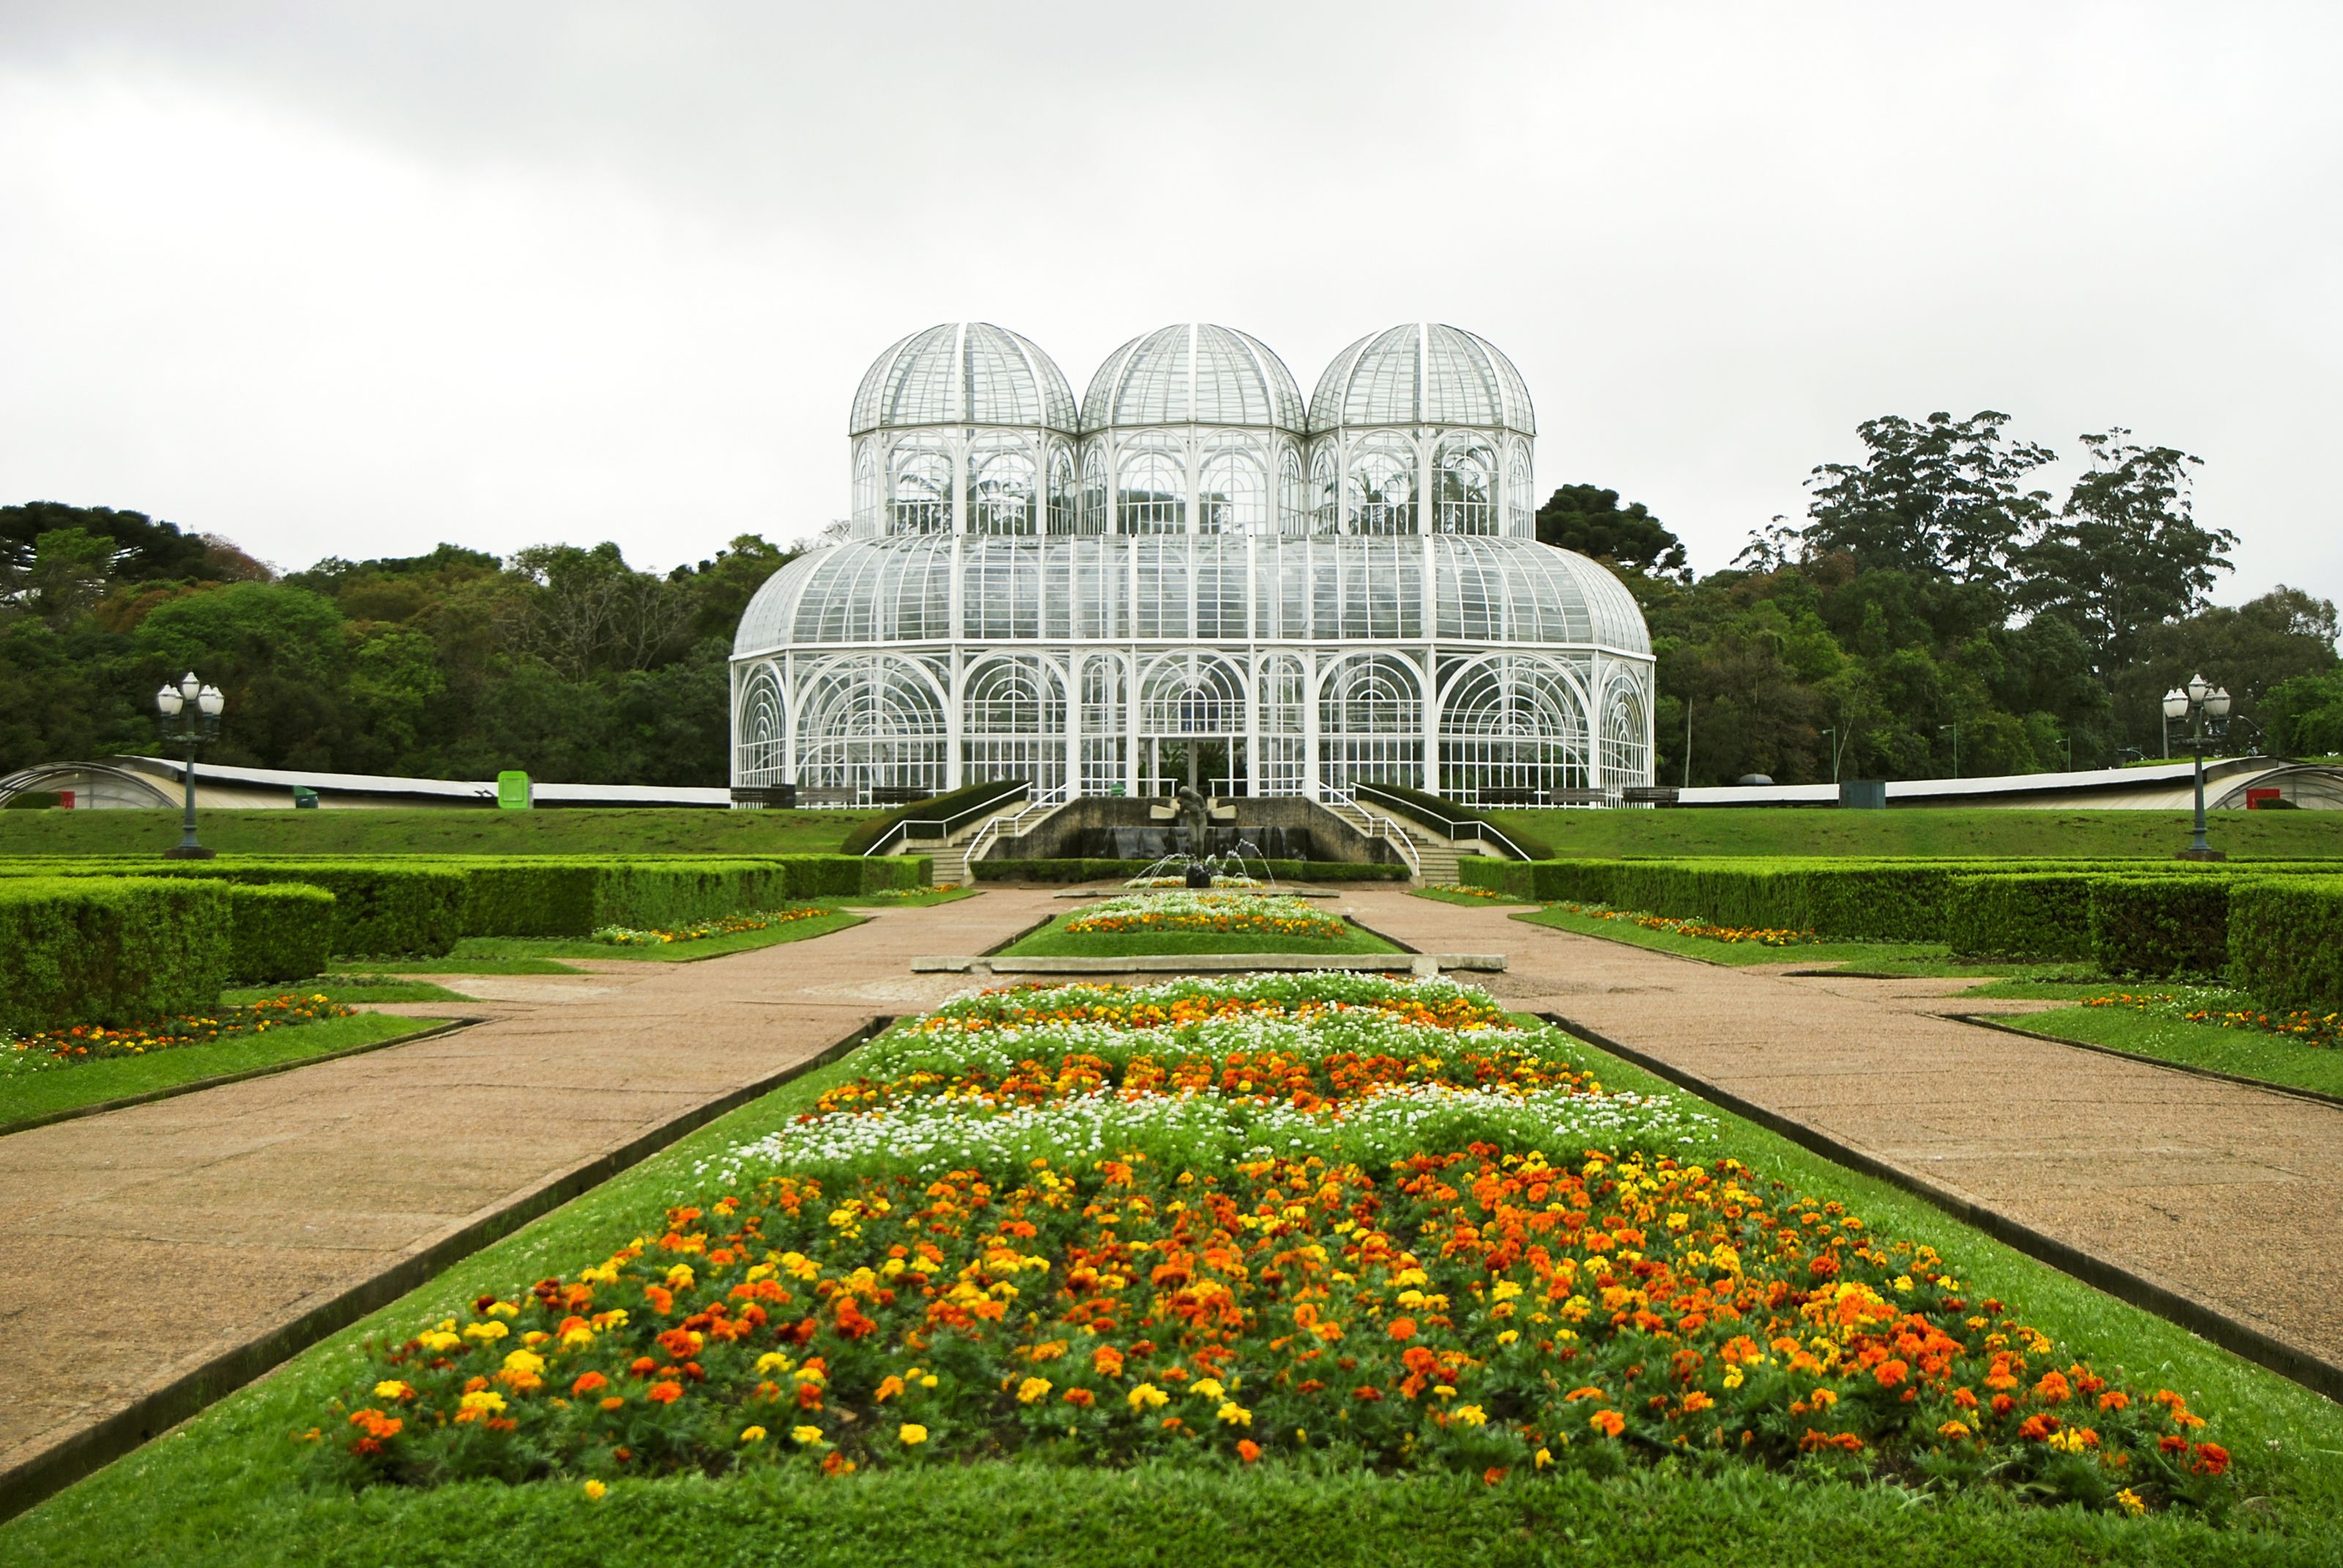 https://hips.hearstapps.com/hmg-prod/images/botanical-garden-greenhouse-royalty-free-image-1647032422.jpg